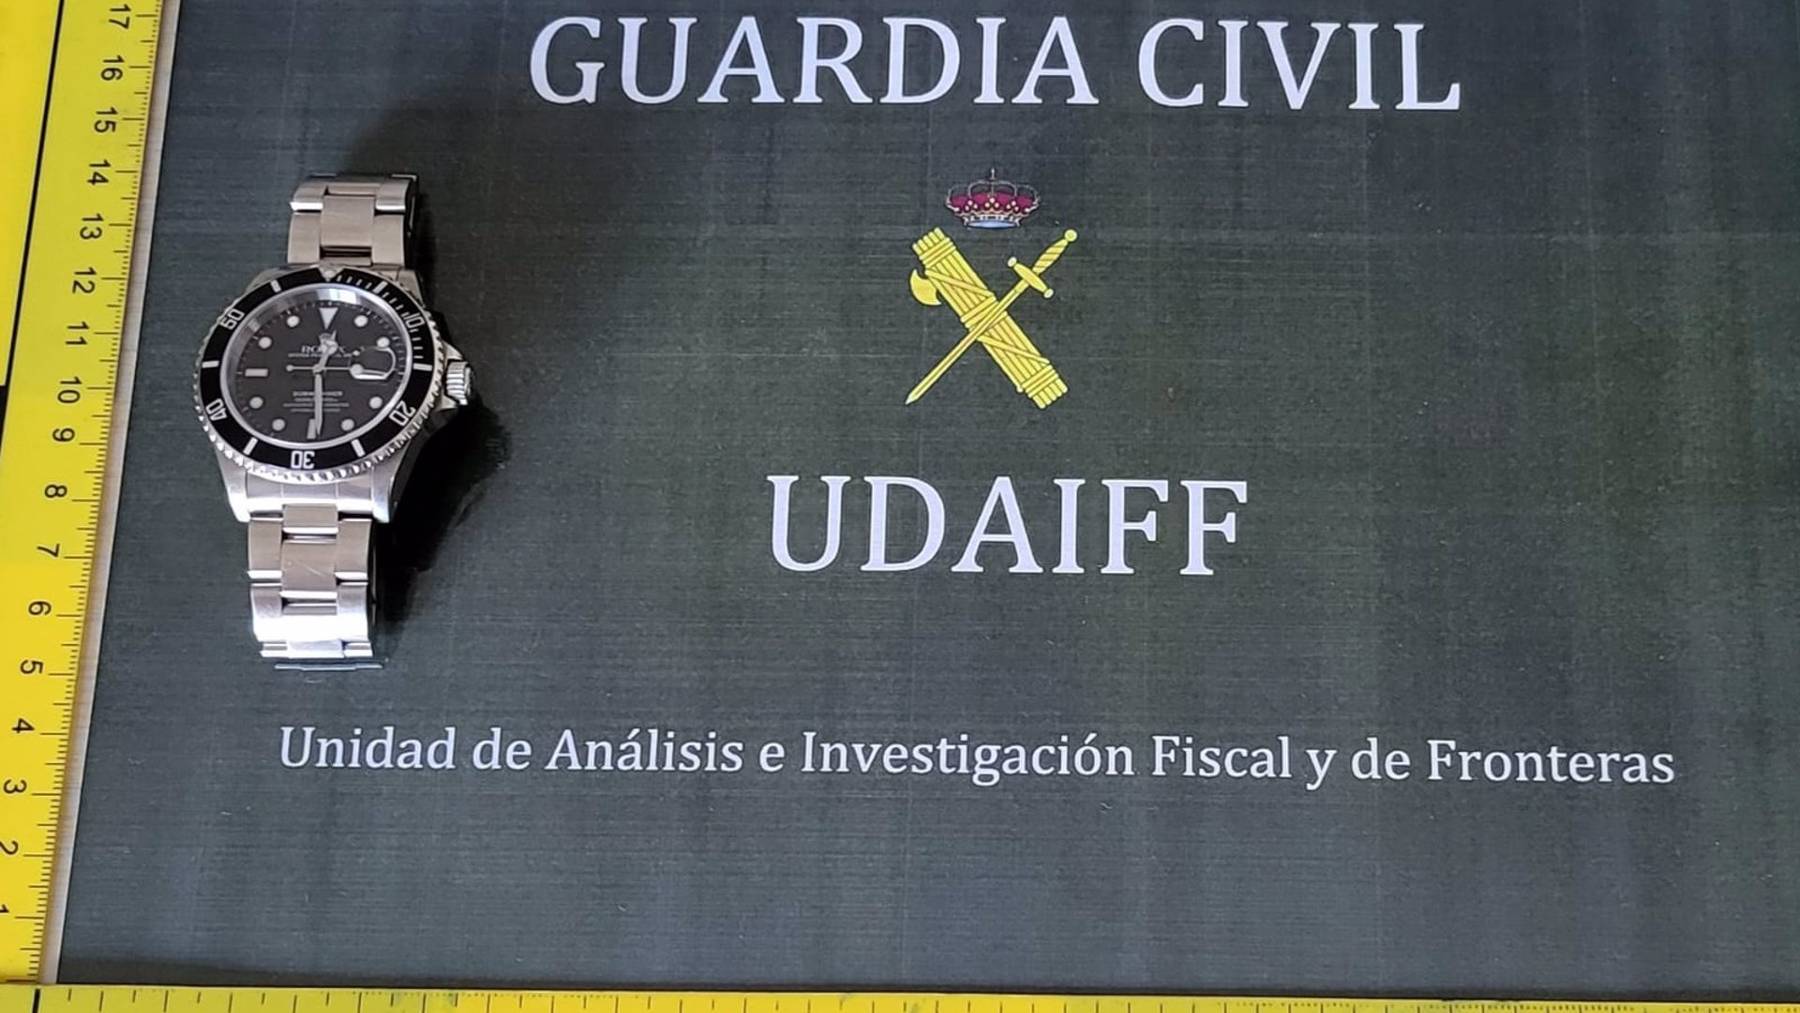 El reloj valorado en 12.000 euros recuperado por la Guardia Civil.